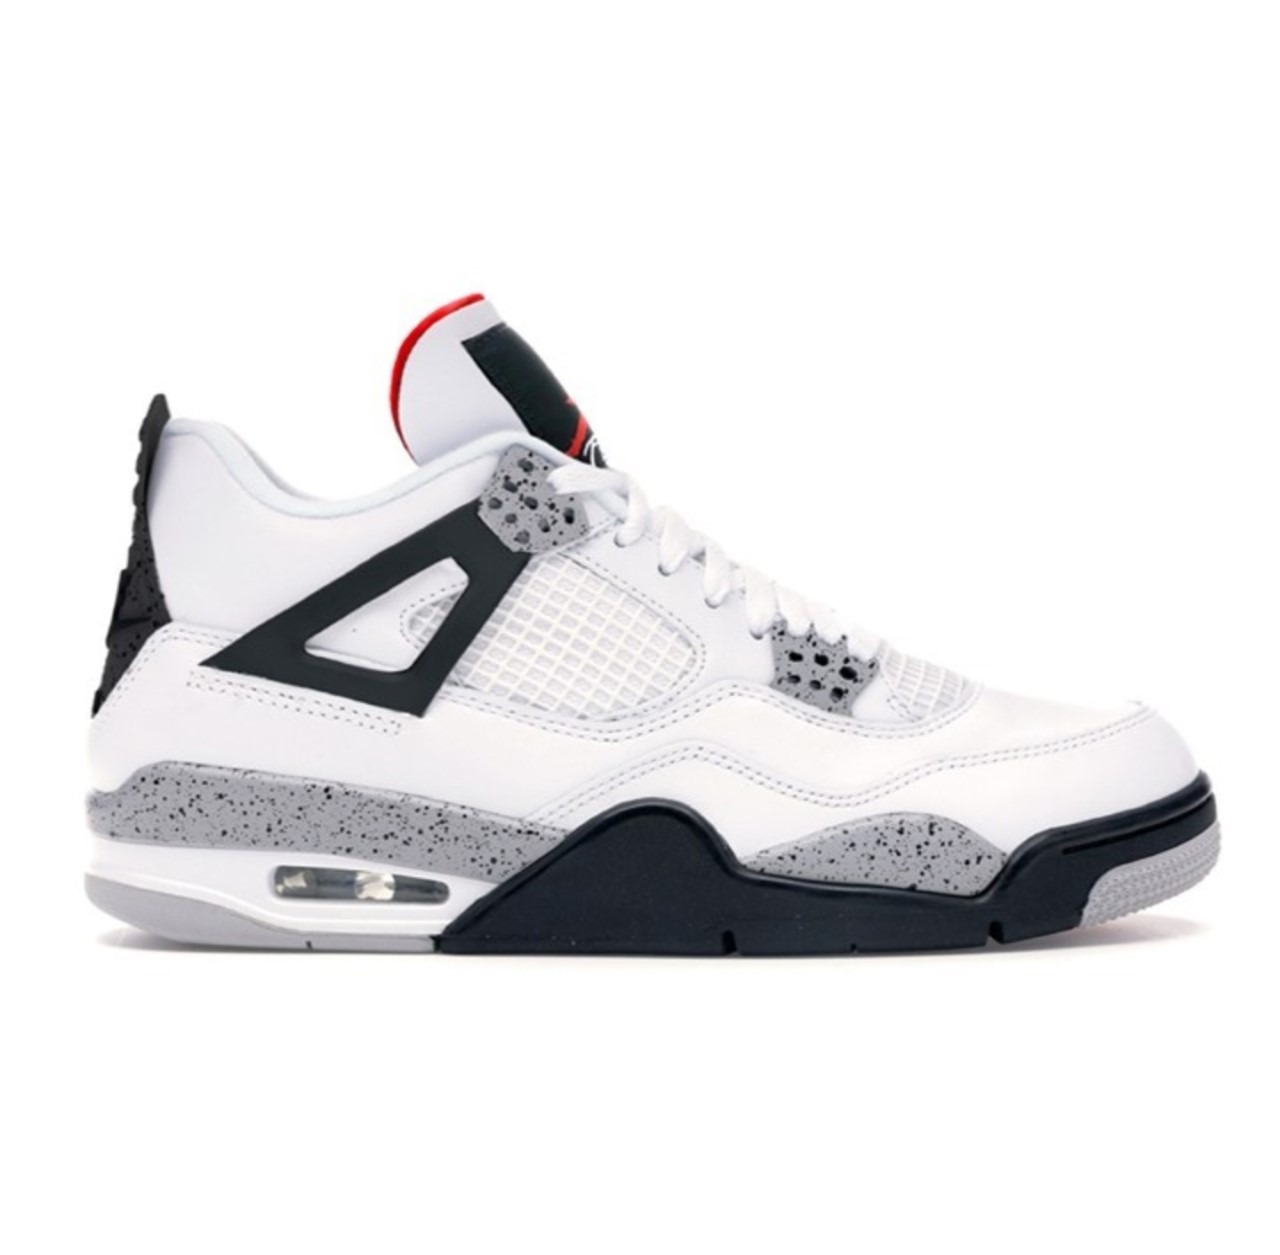 Air Jordan 4 Retro “White Oreo” Release Date